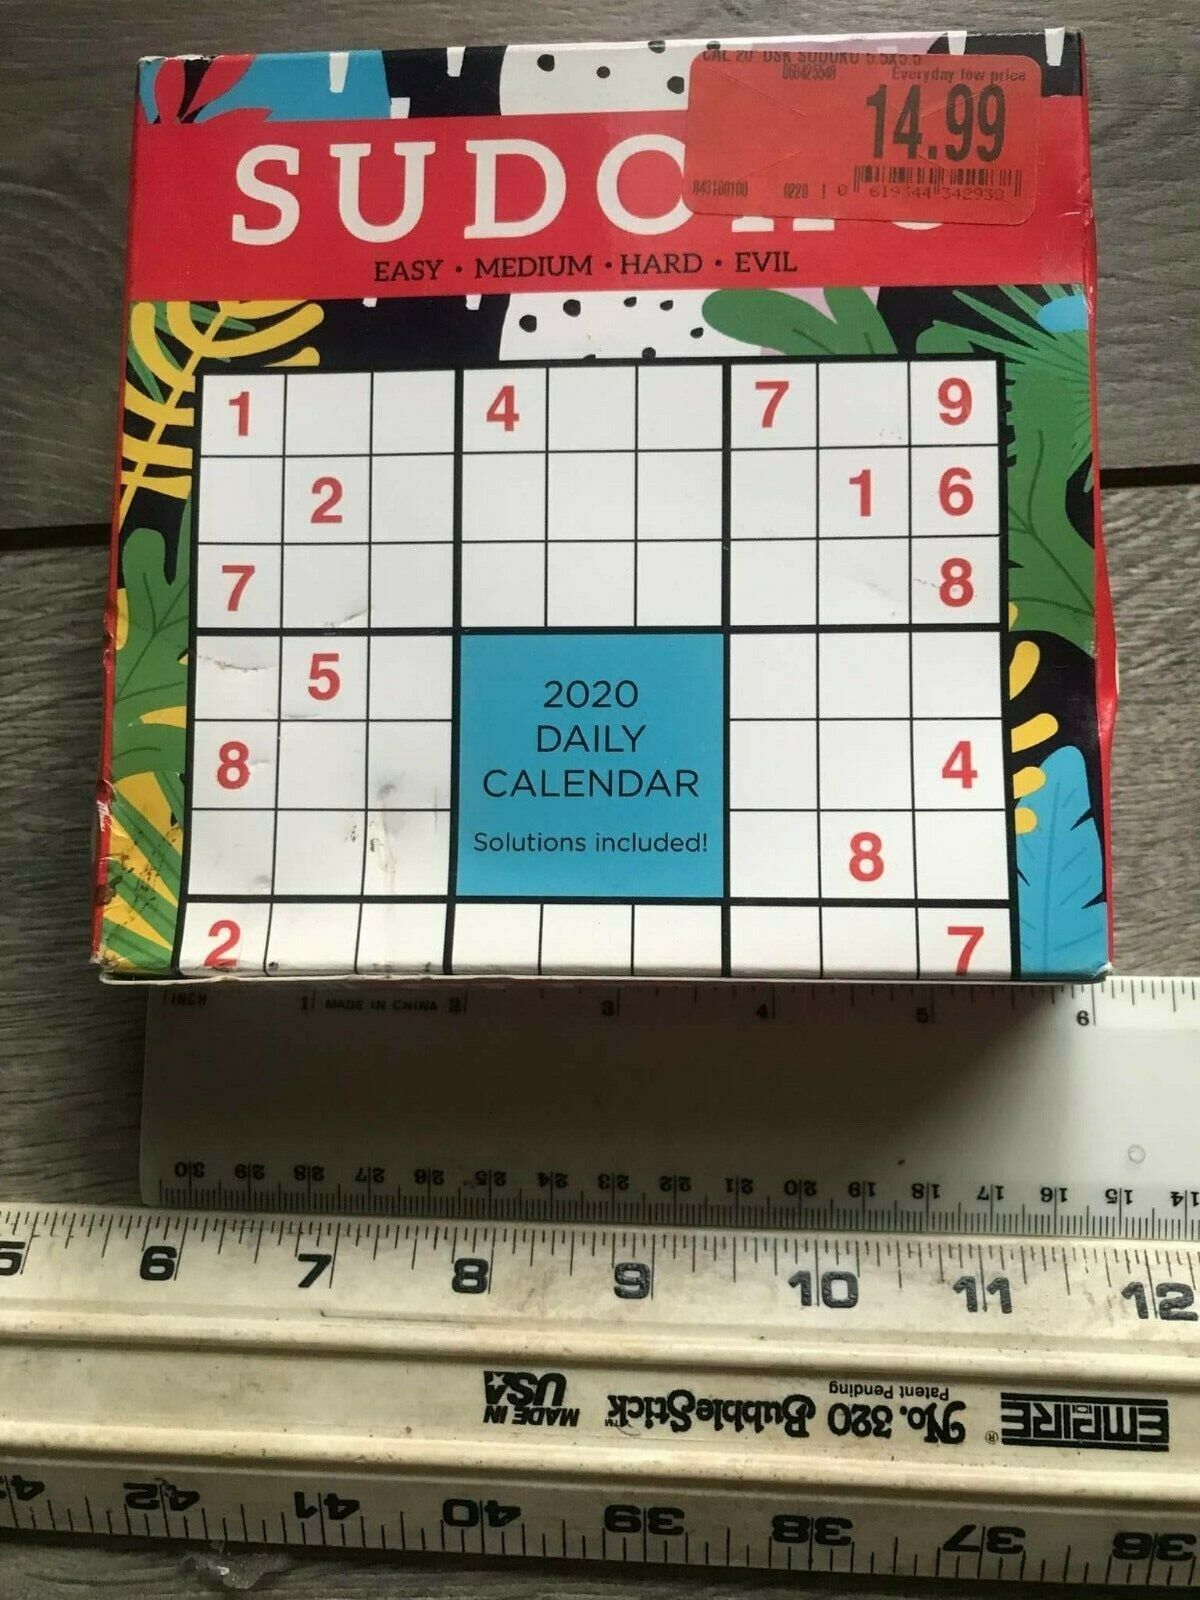 20/20 Daily Desktop Calendar Sudoku